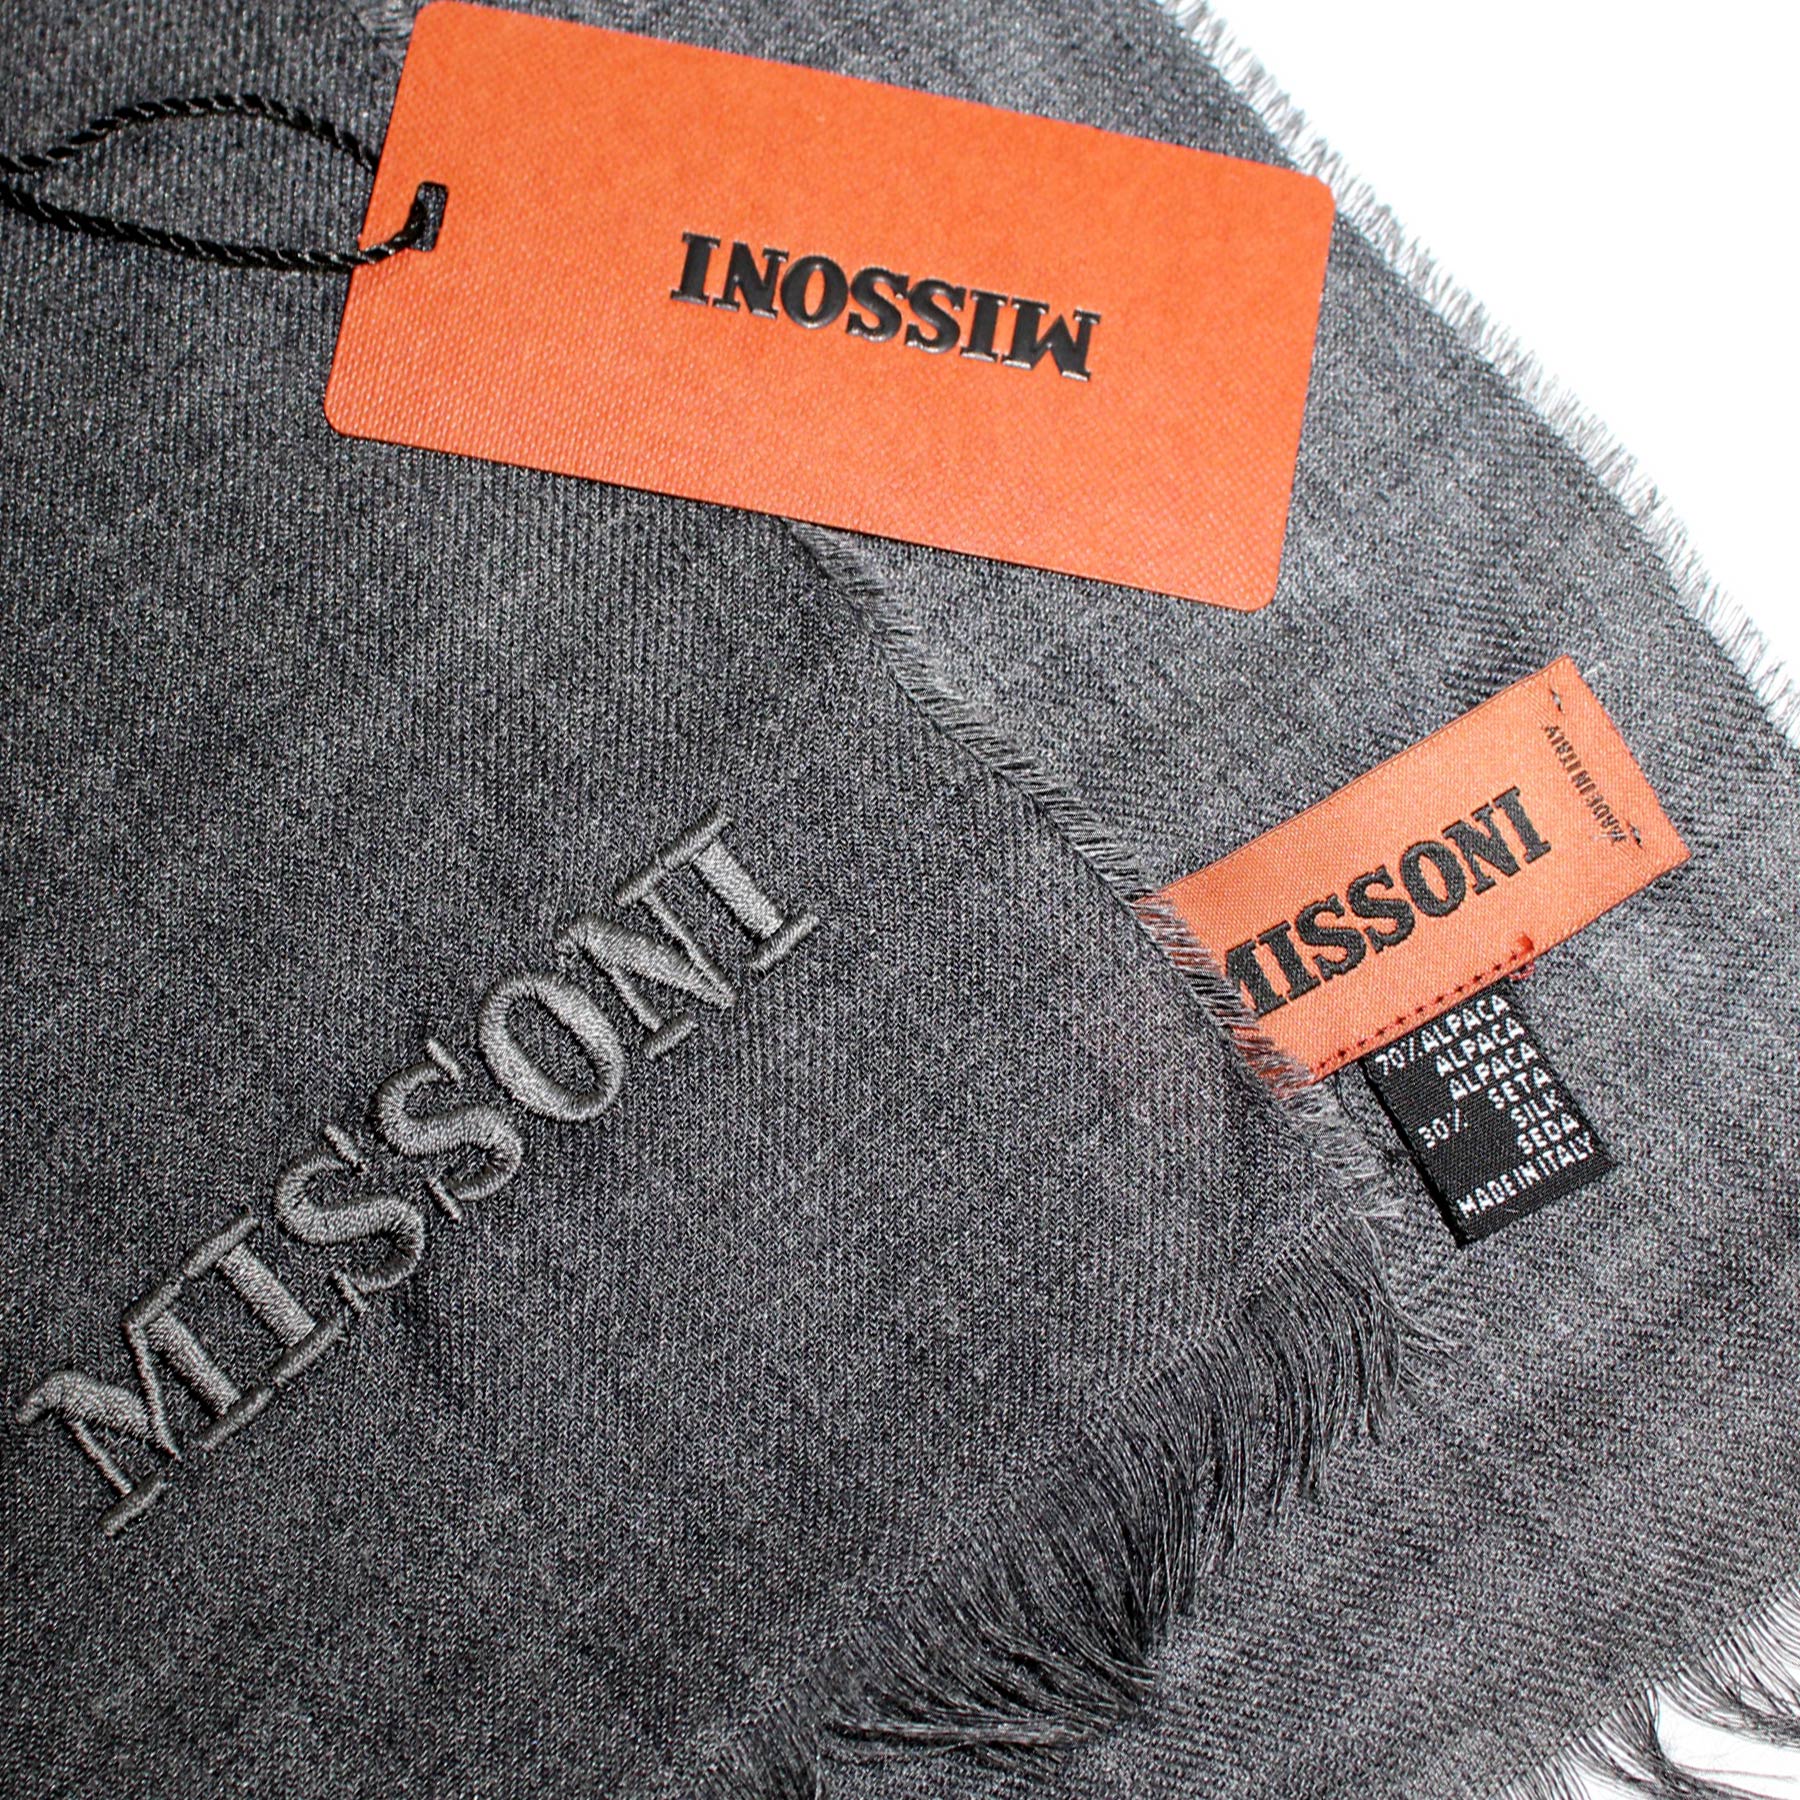 Missoni Scarf Charcoal Gray Design - Alpaca Silk Designer Shawl